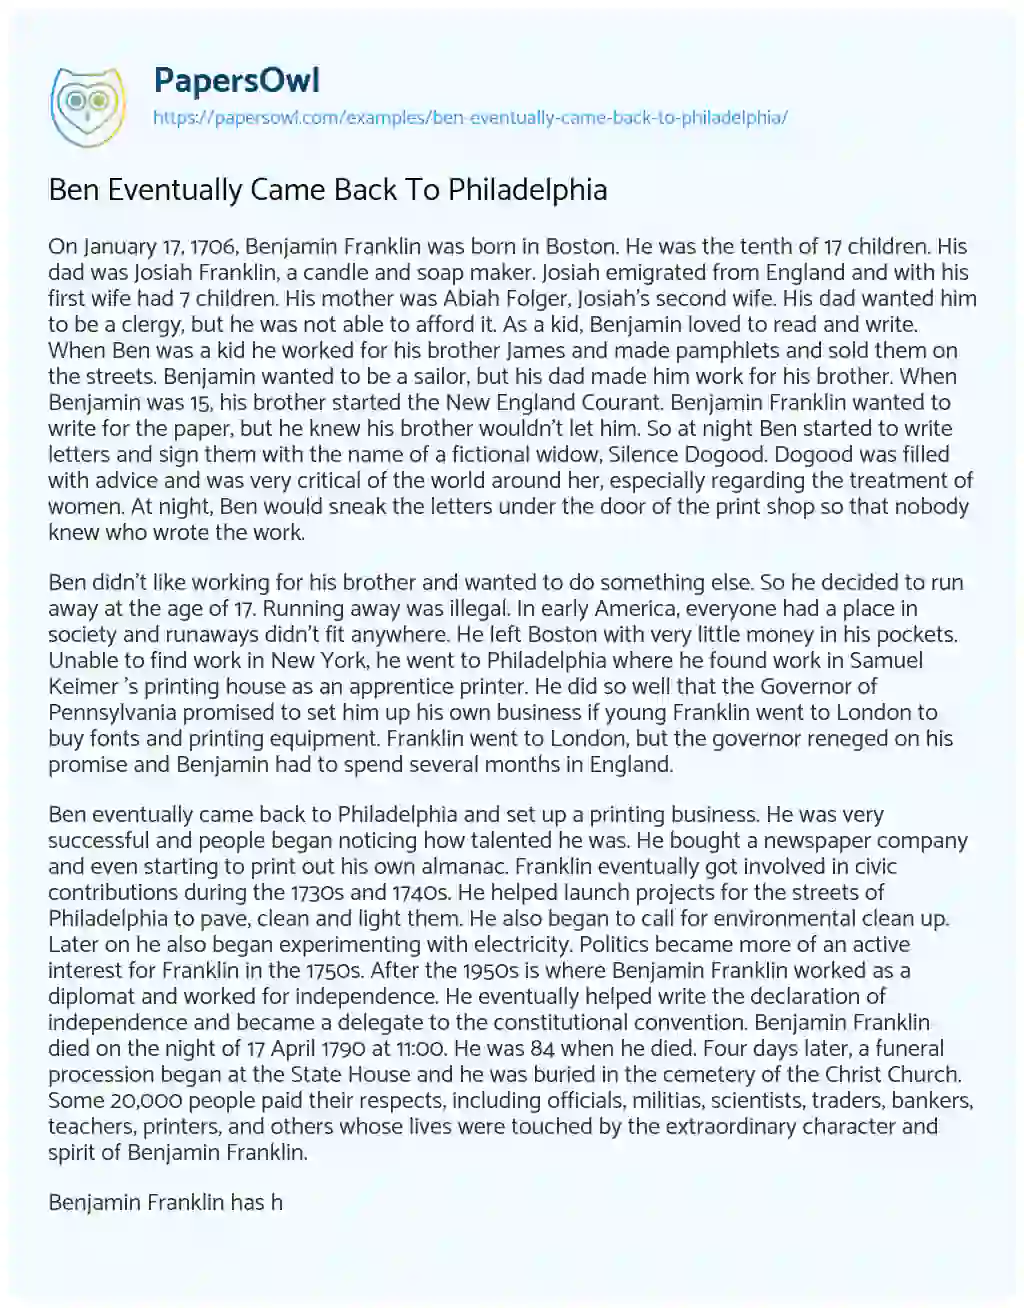 Ben Eventually Came Back to Philadelphia essay